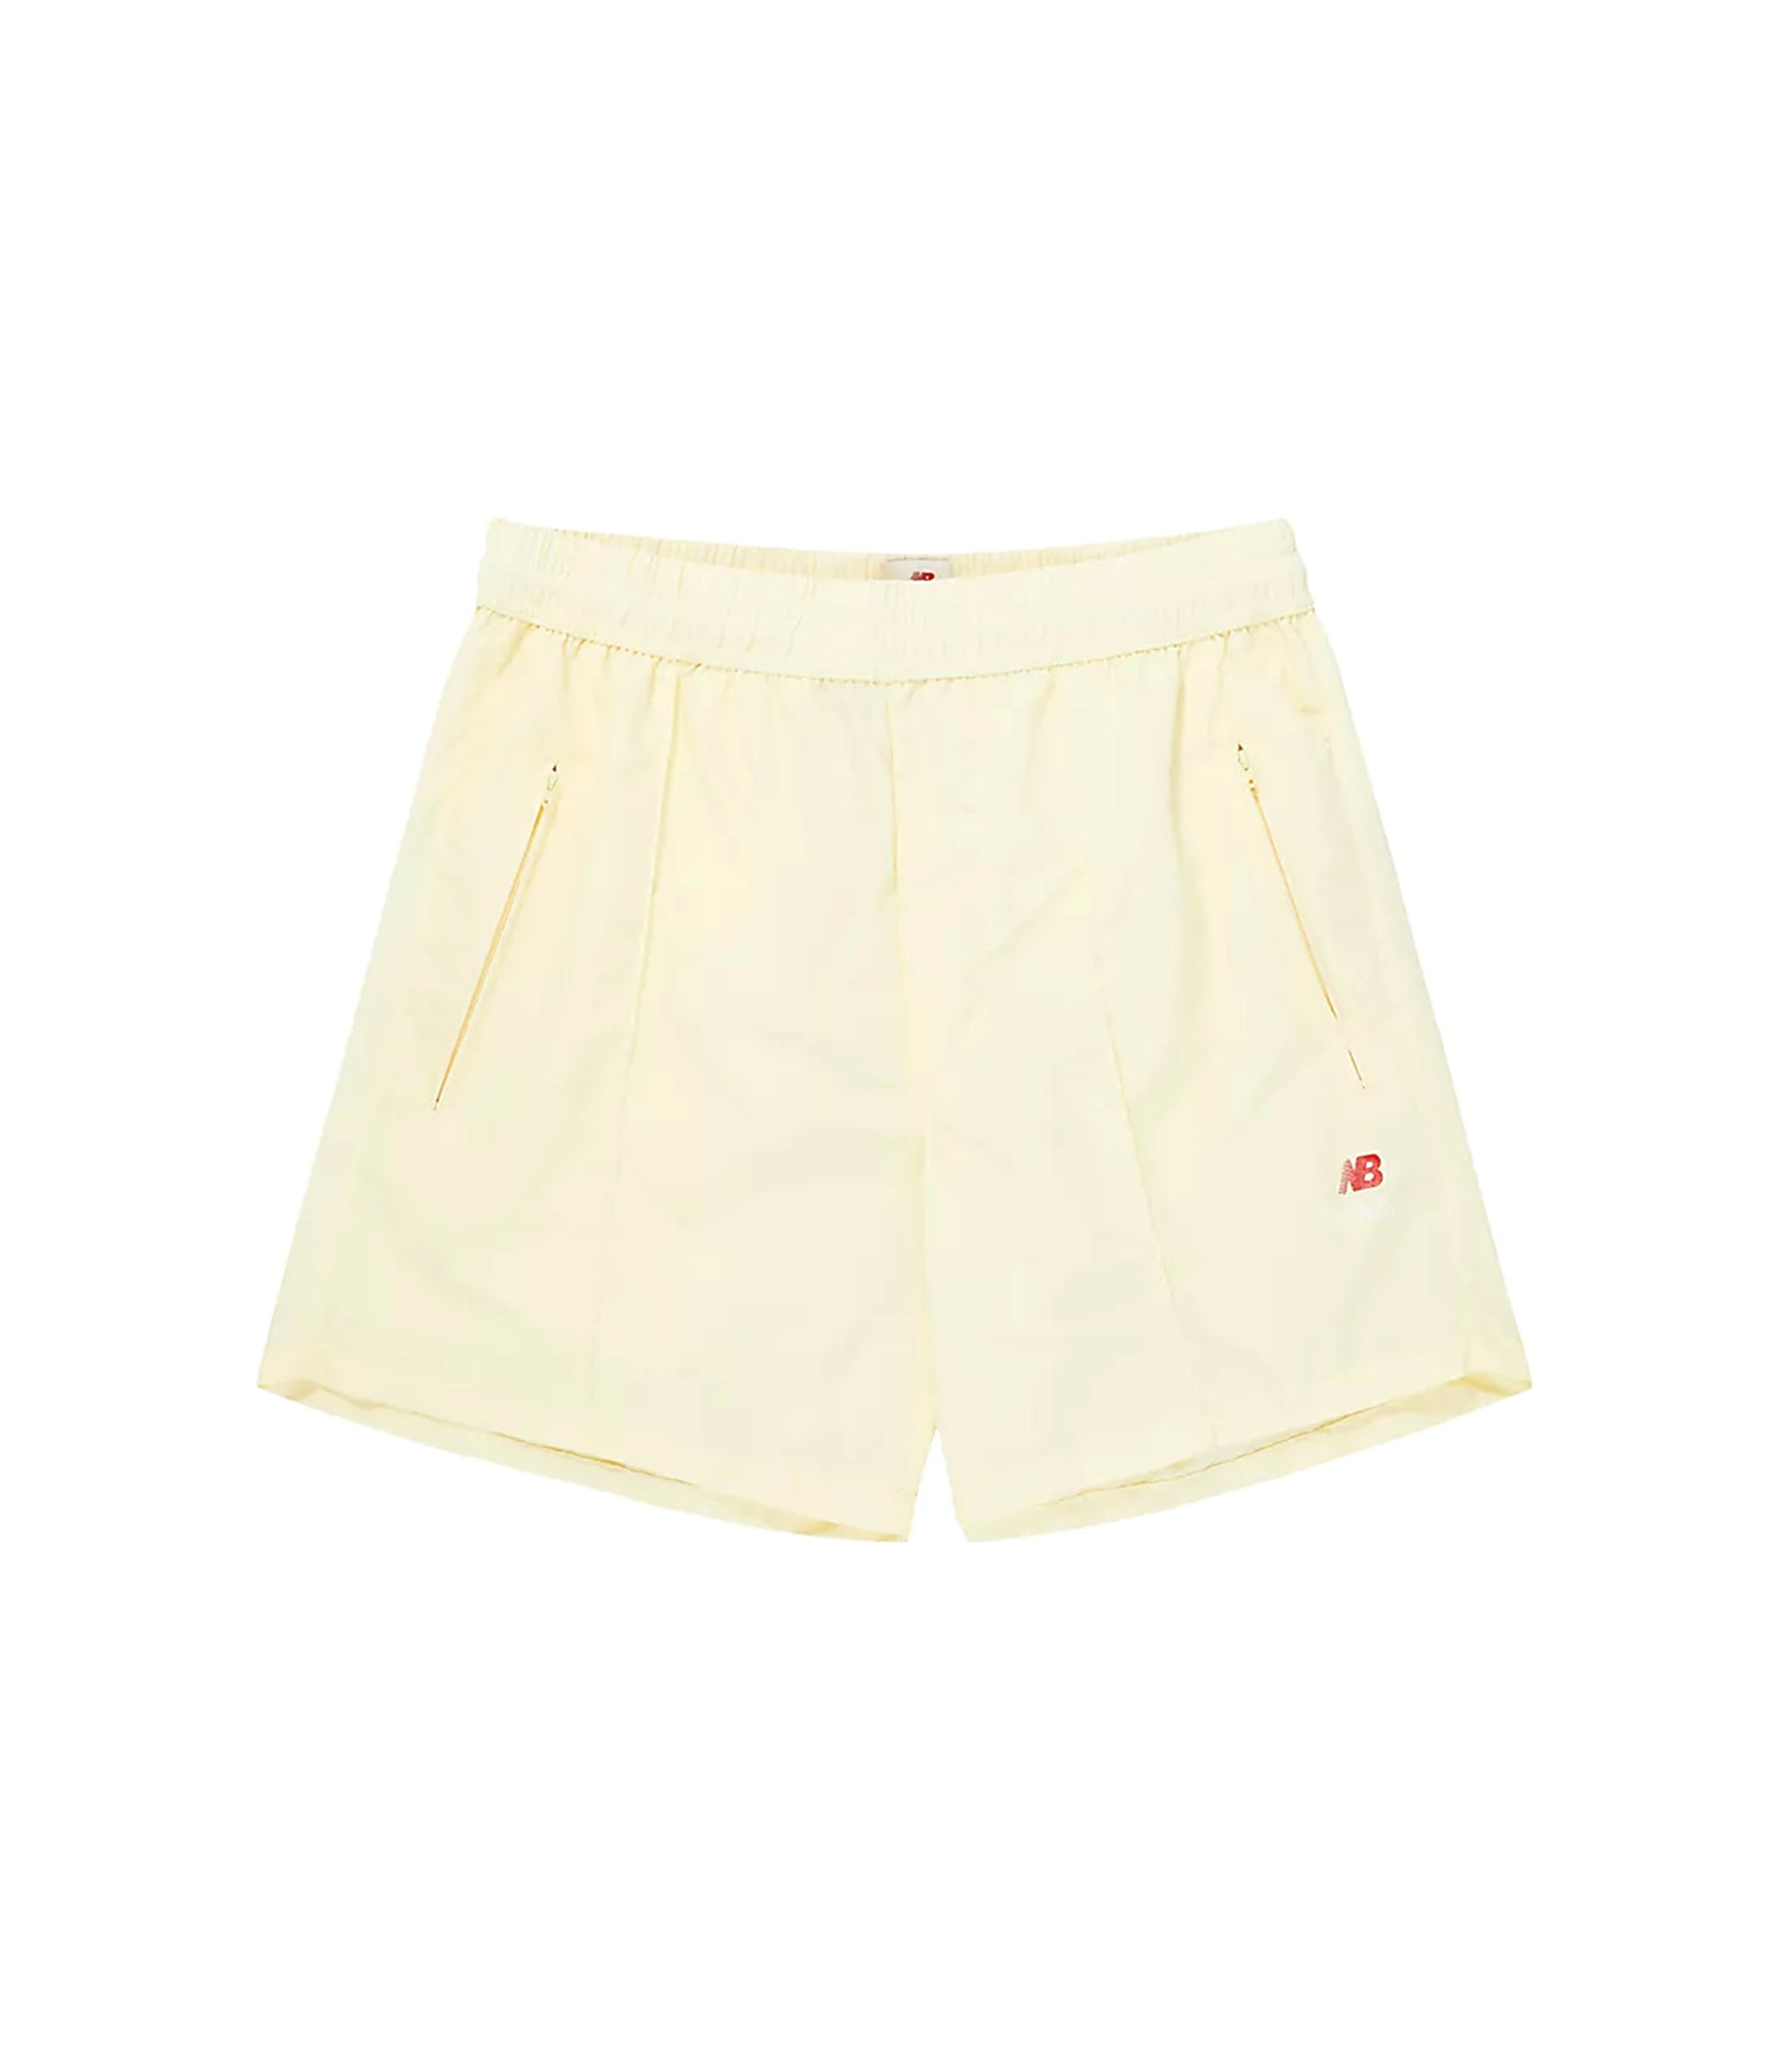 Made in USA Pin Tuck Shorts - Dawn Glow